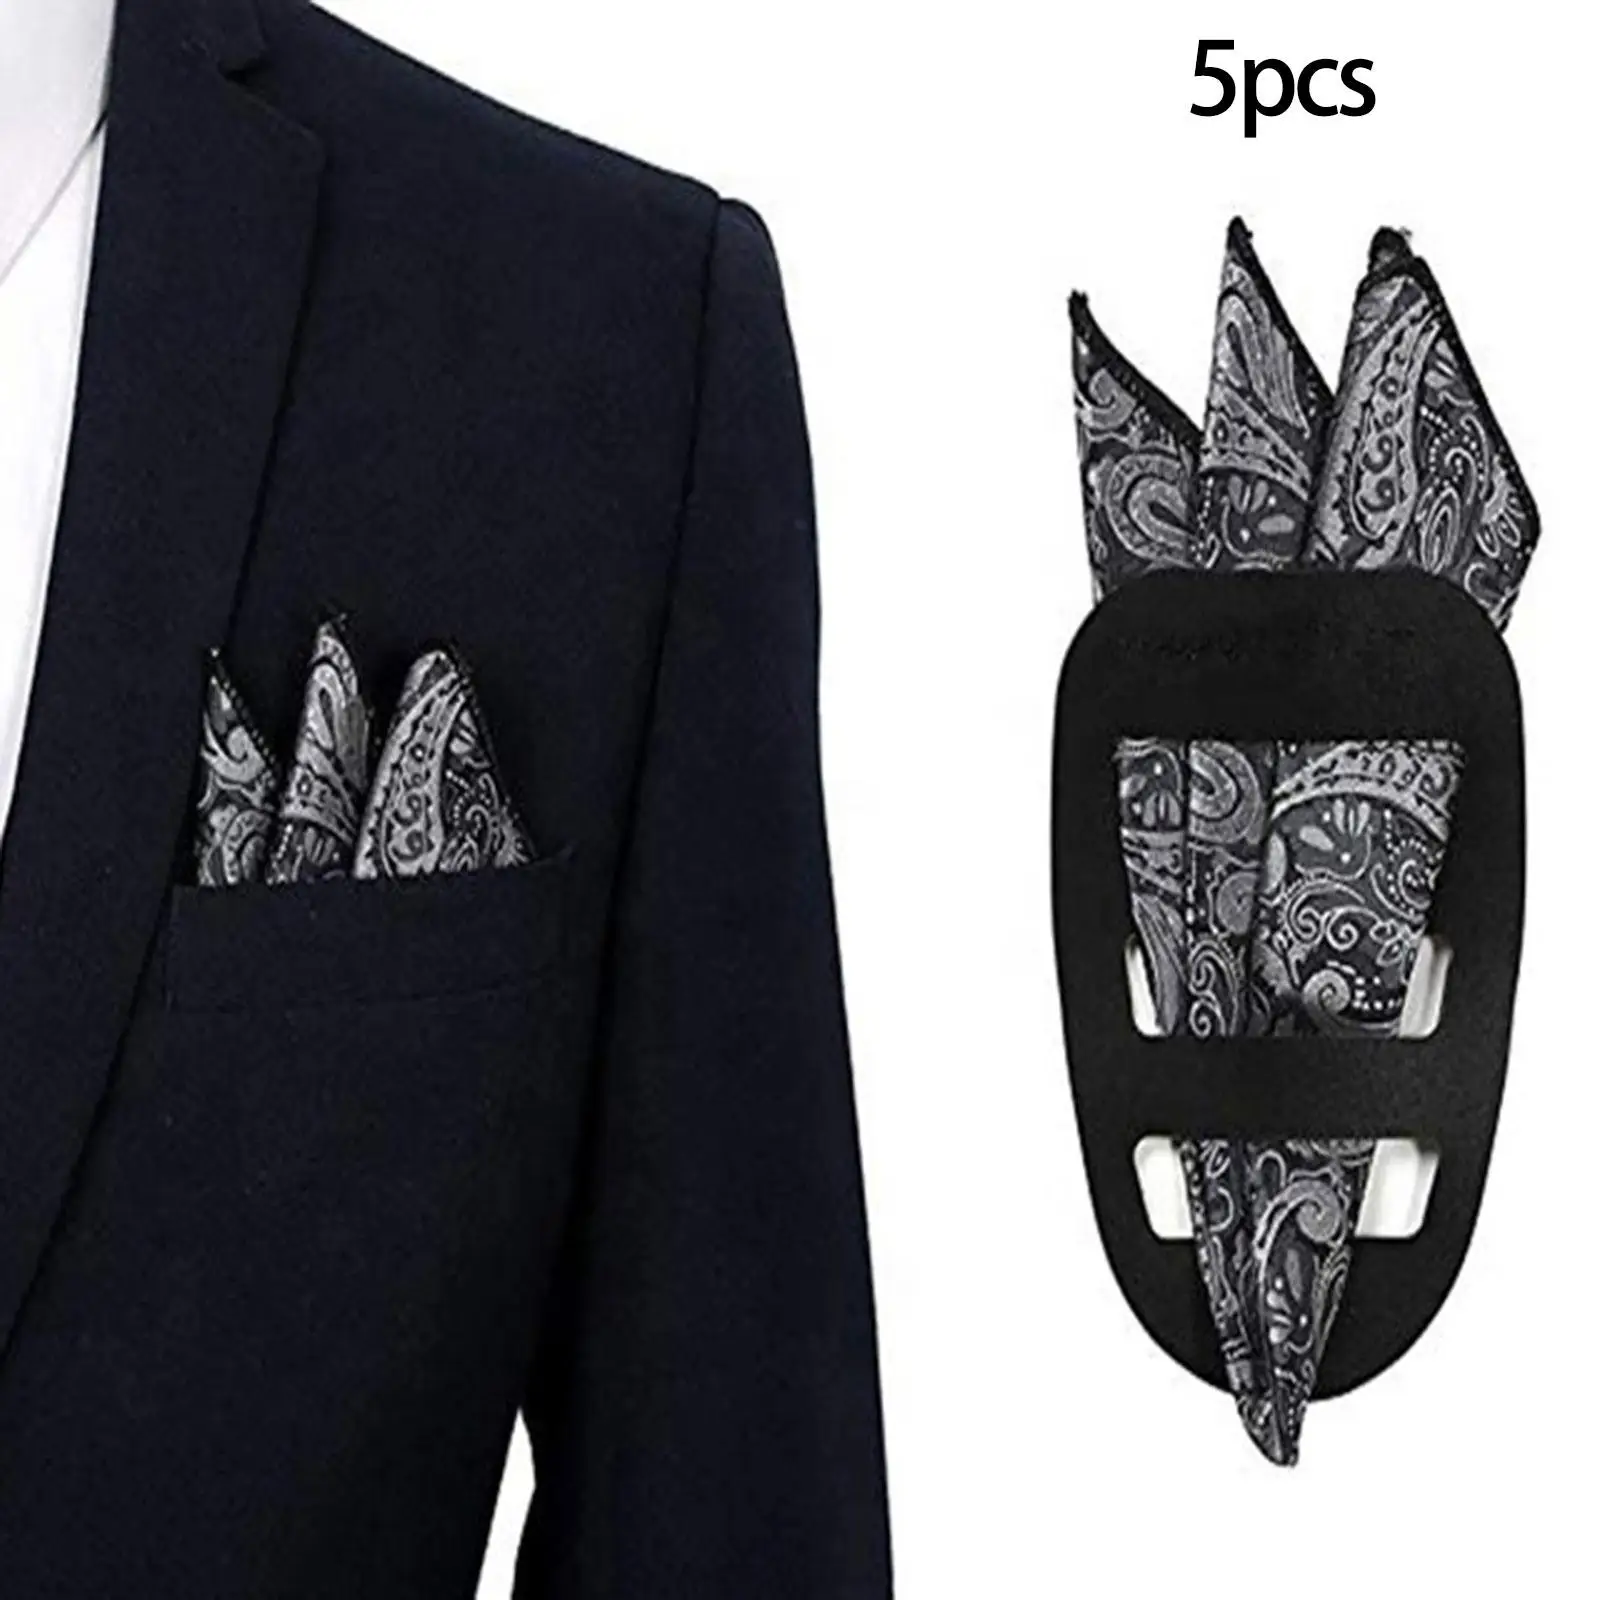 5 Pieces Pocket Square Holder Square Scarf Holder for Men’S suits Jackets